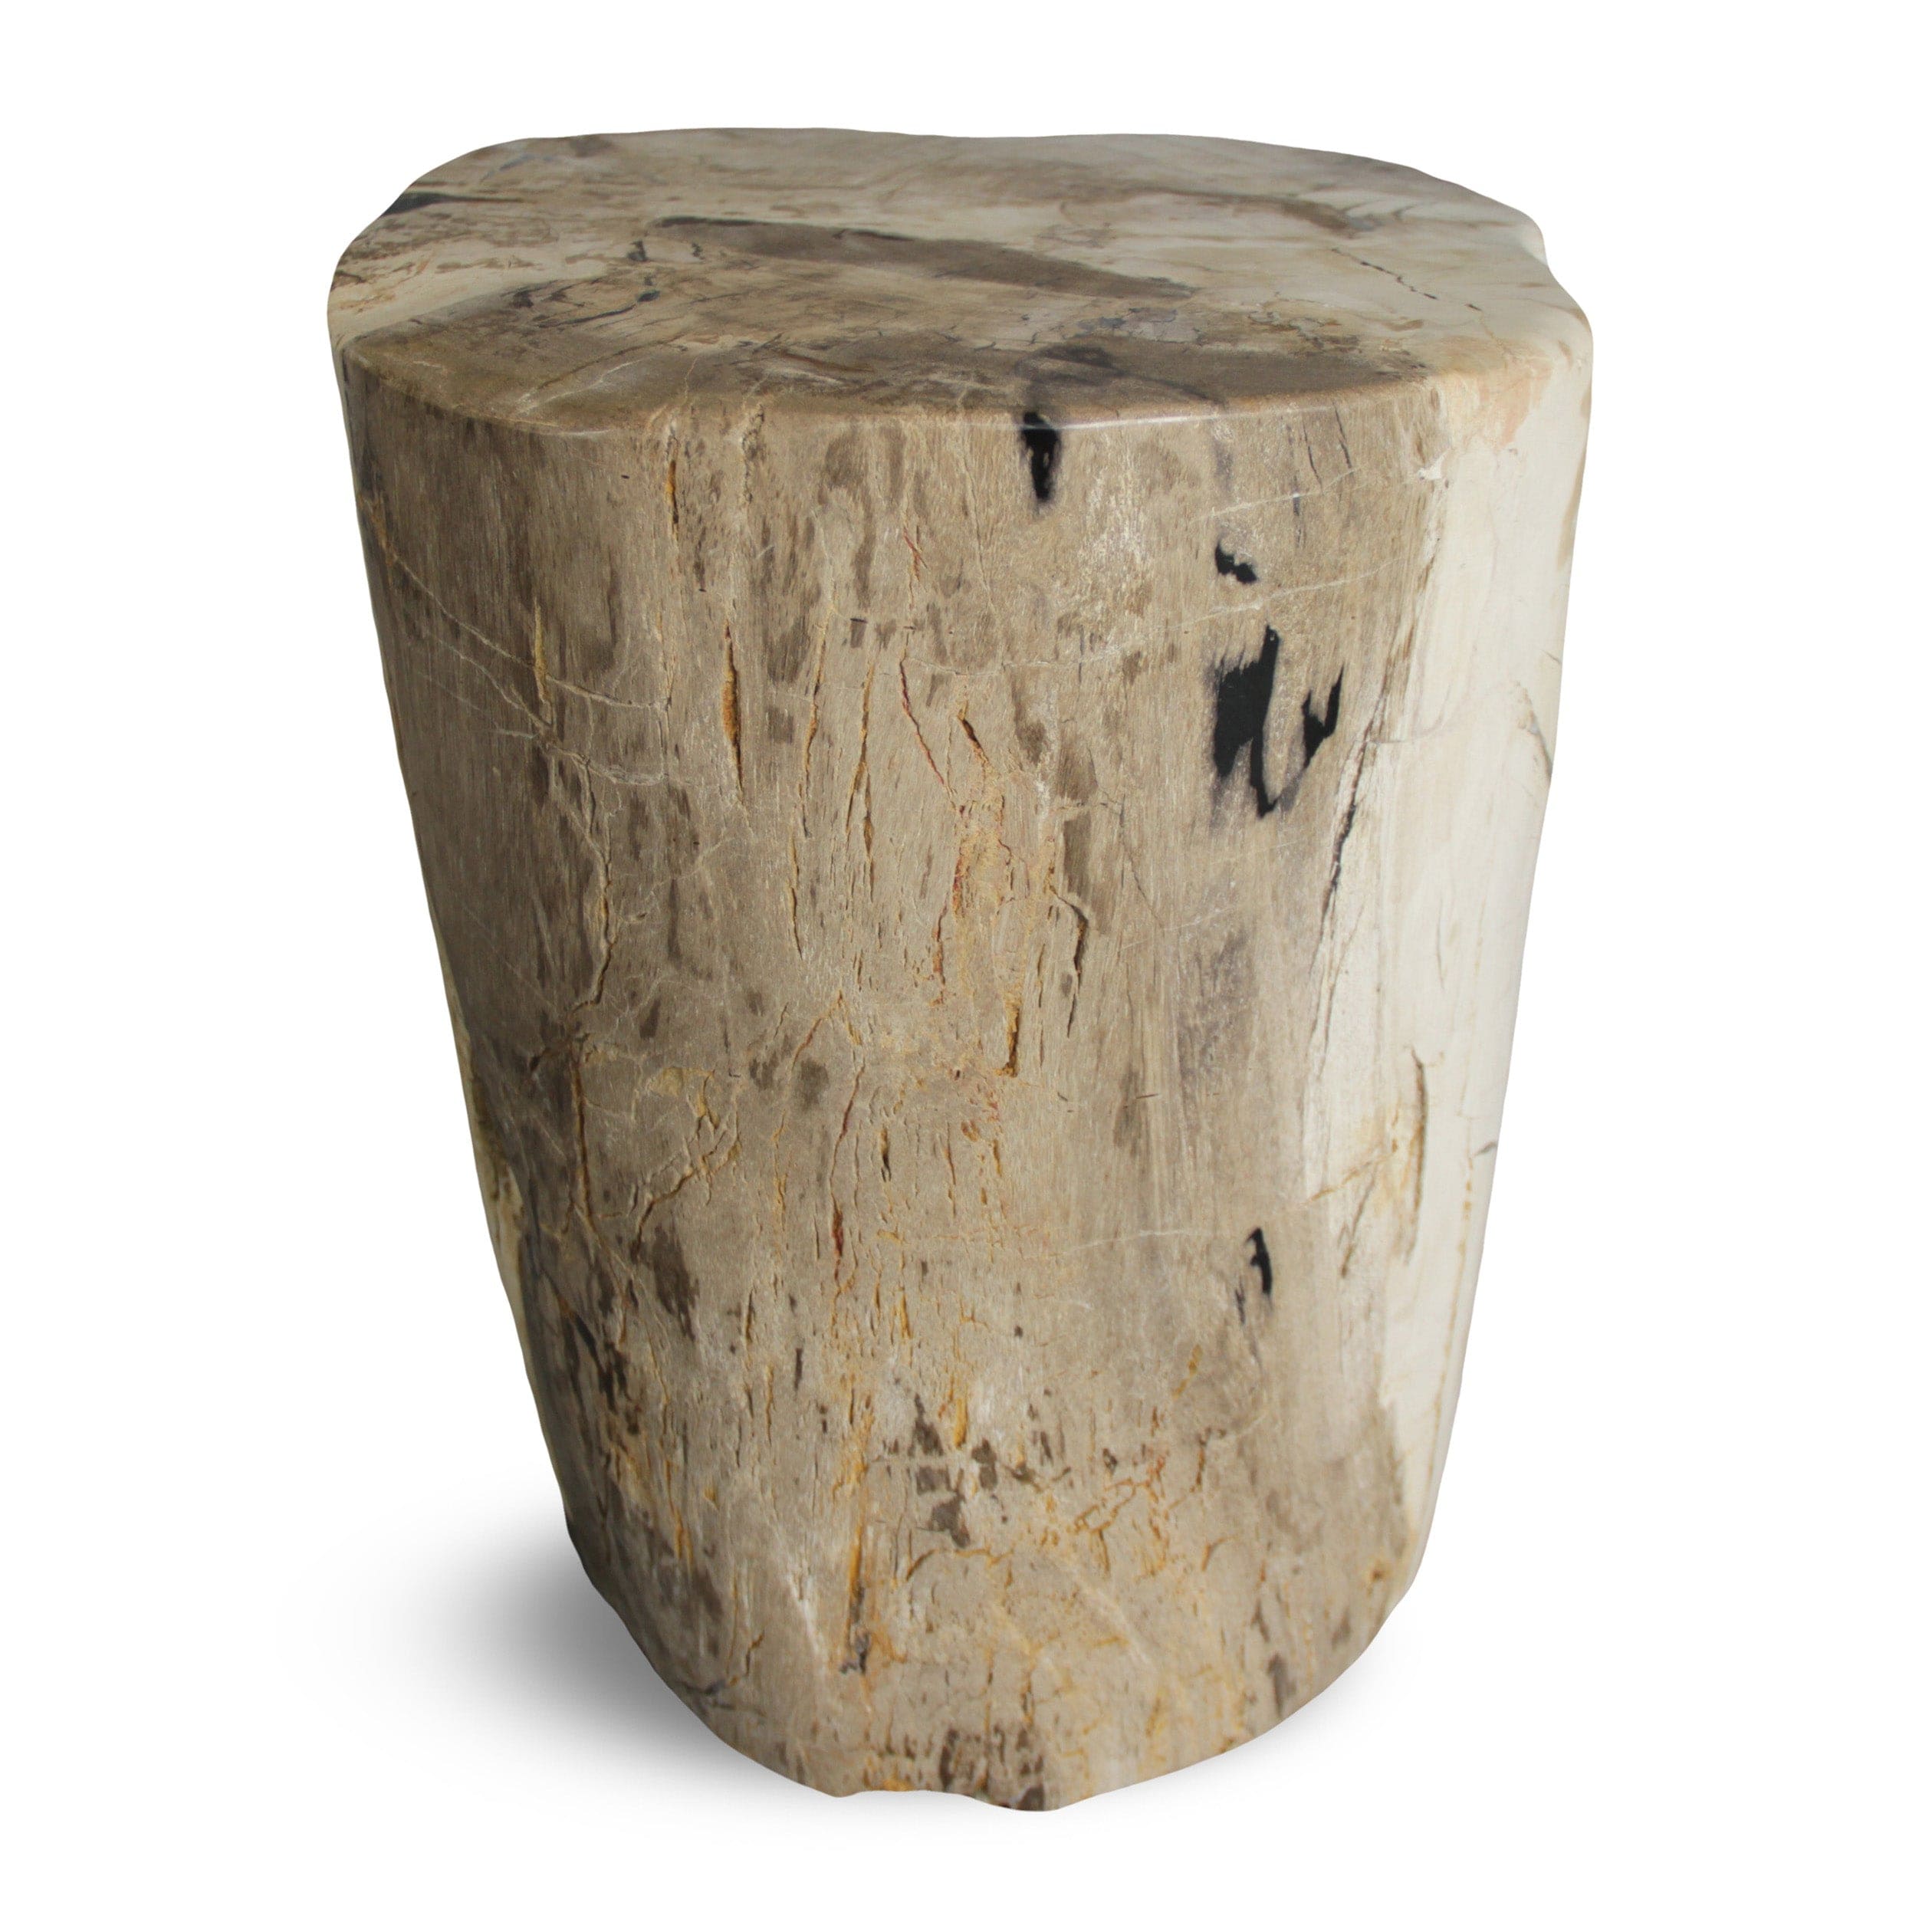 Kalifano Petrified Wood Petrified Wood Round Stump / Stool from Indonesia - 16" / 172 lbs PWS3200.008